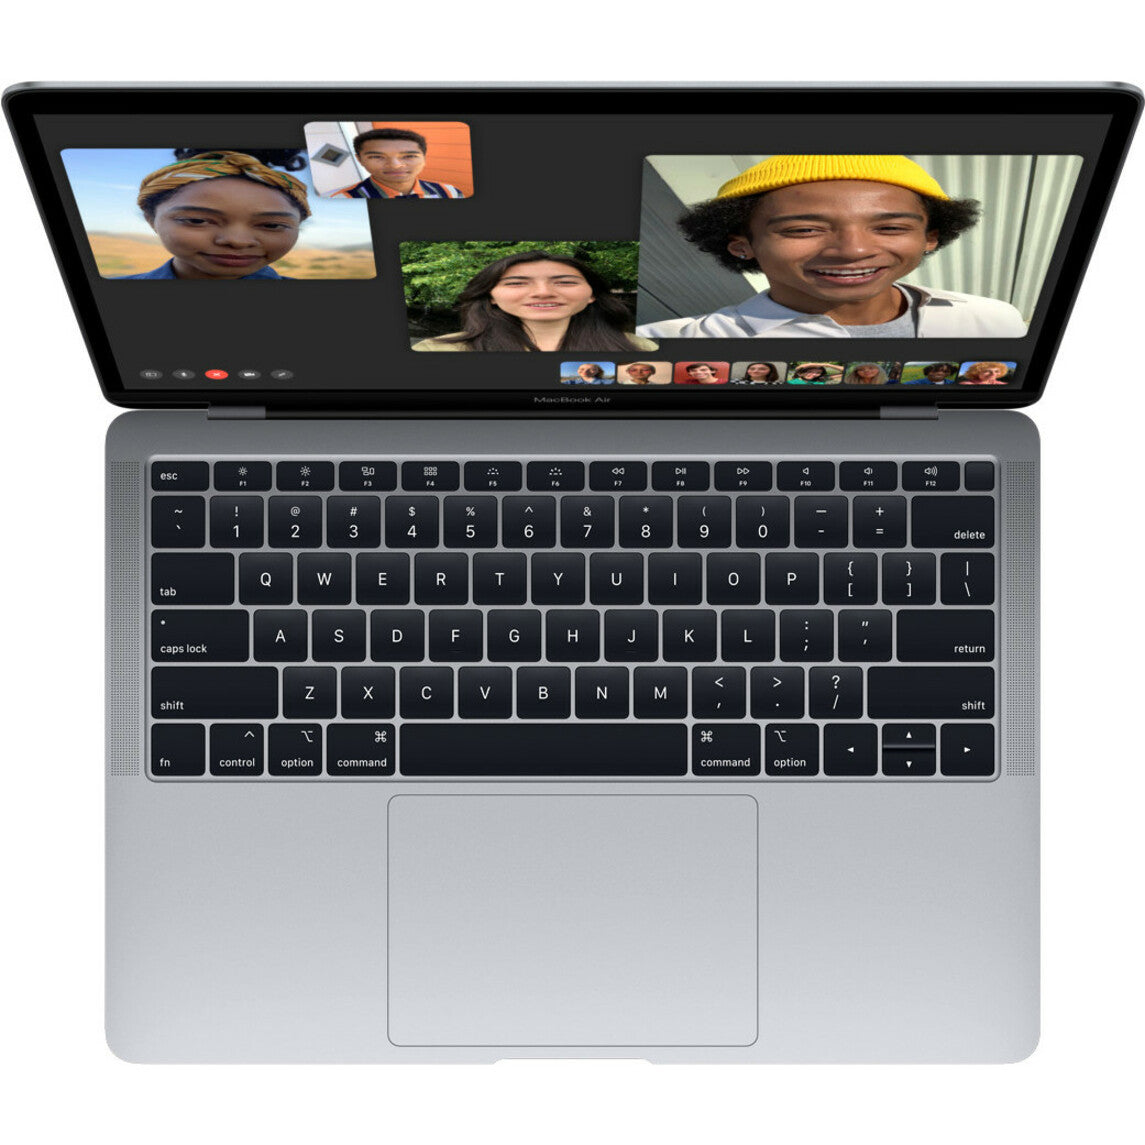 Apple MWTJ2LL/A MacBook Air 13-inch, 1.1GHz 10th Gen Intel Core i3, 8GB RAM, 256GB SSD, Space Gray